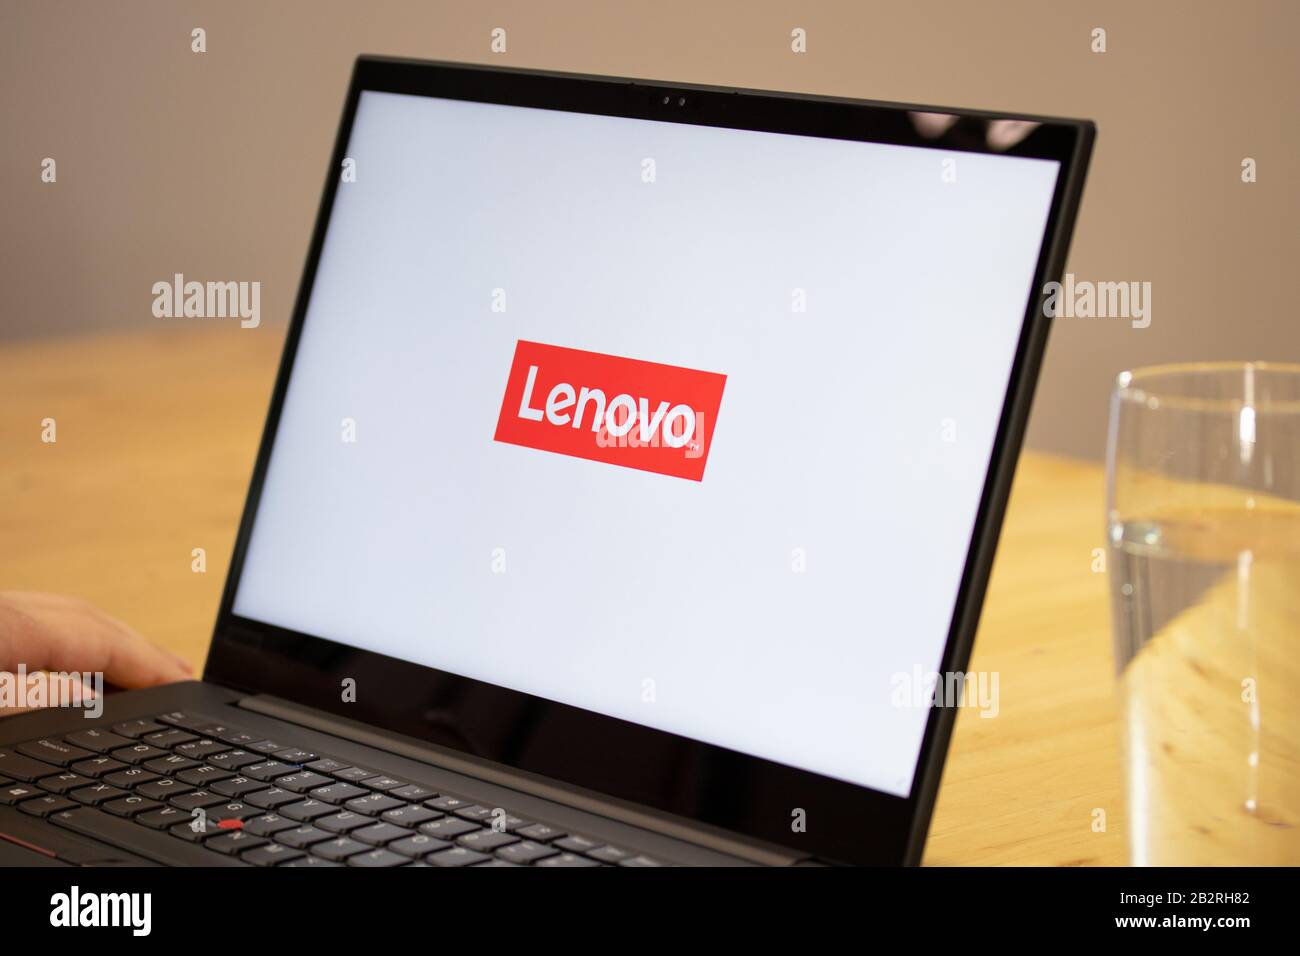 Person sitting a desk using a Lenovo laptop with the Lenovo logo on-screen. Stock Photo